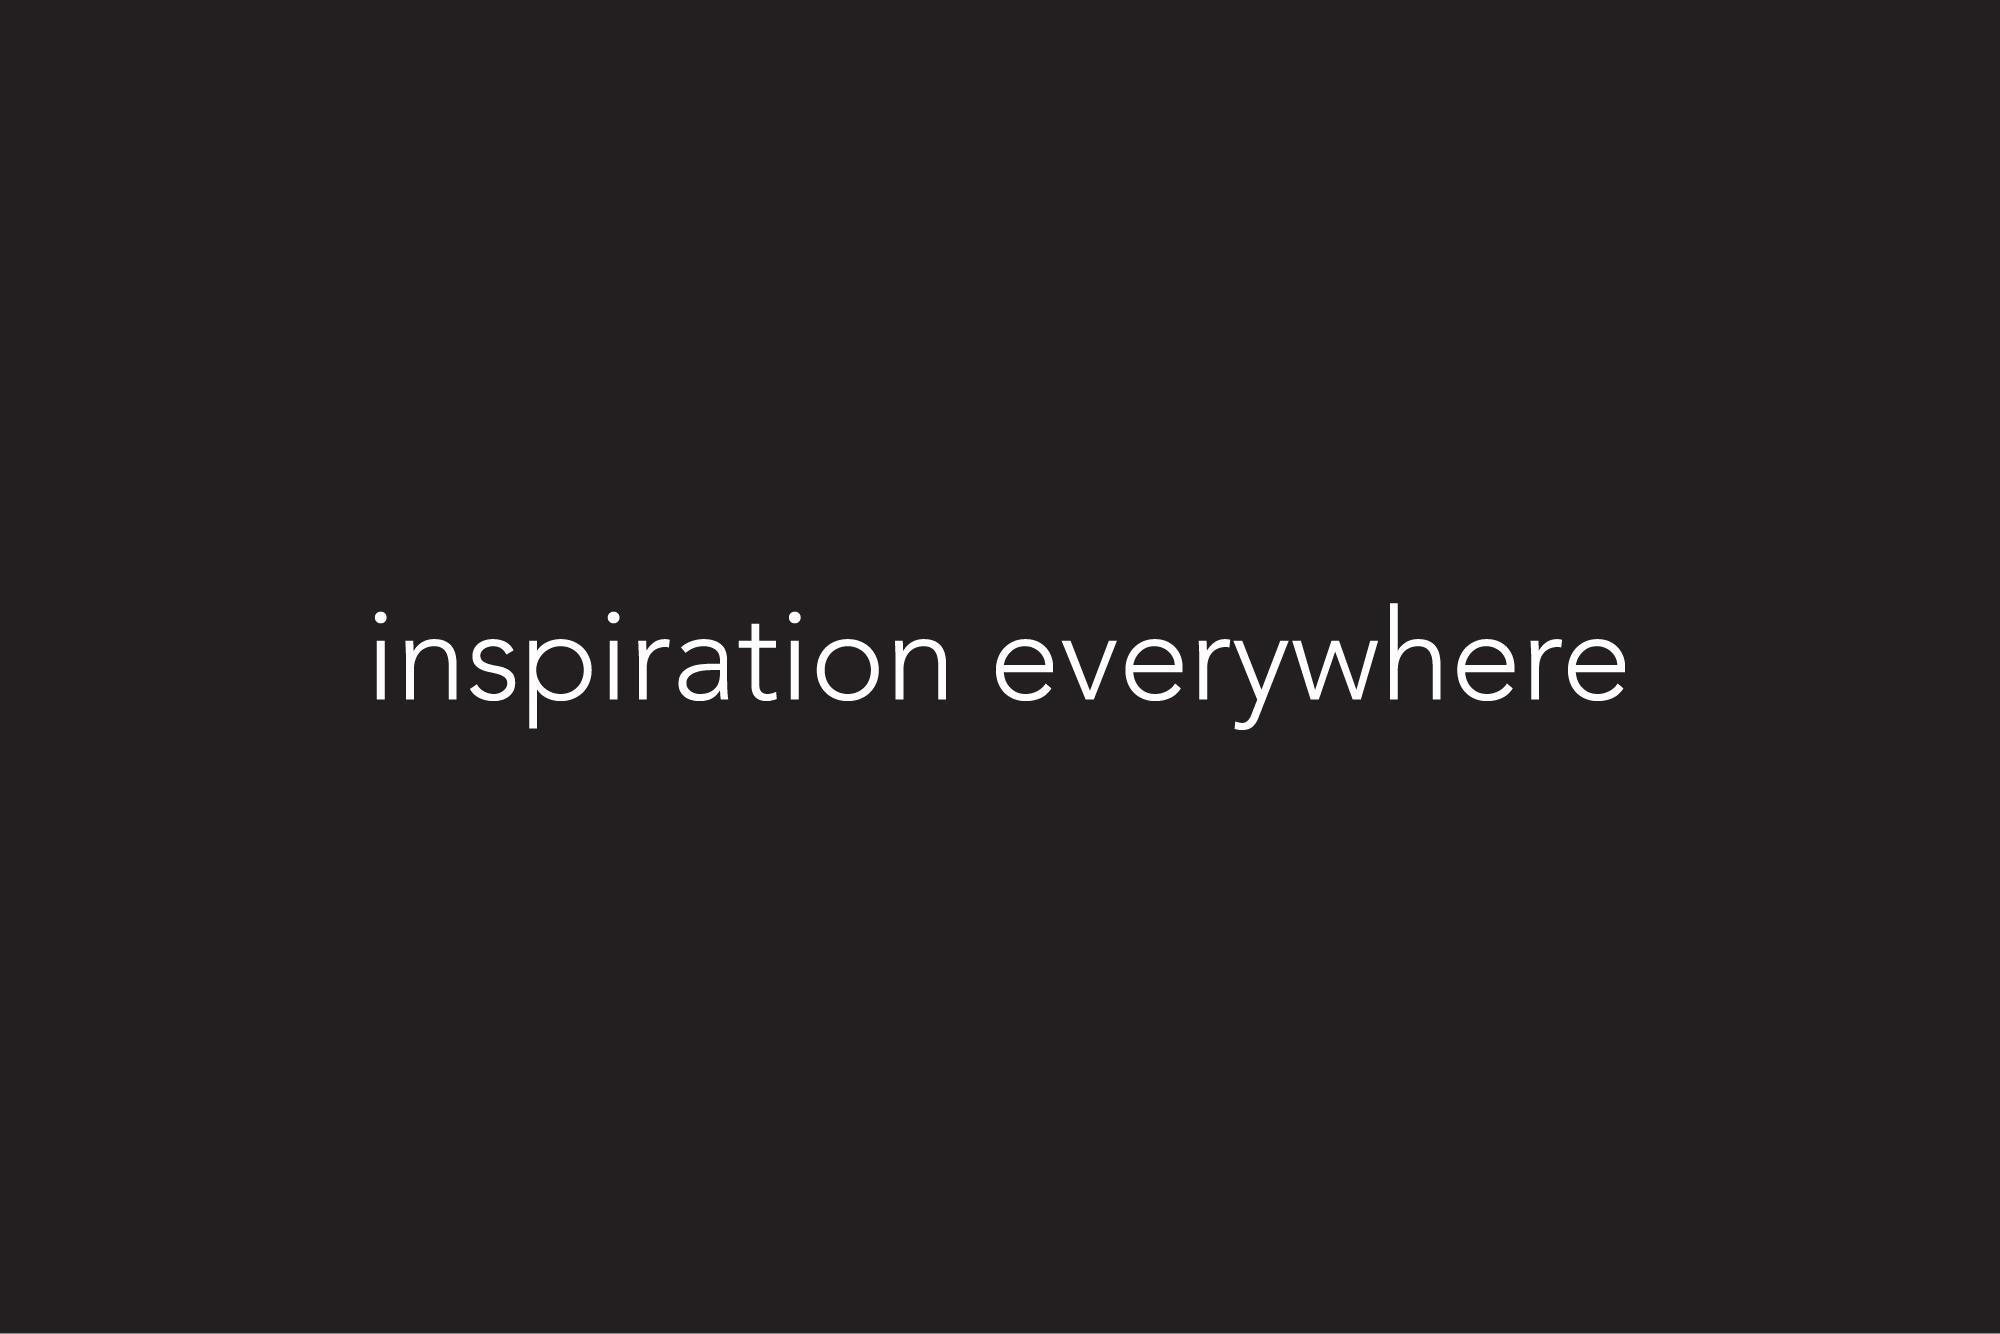 KML tagline: Inspiration Everywhere